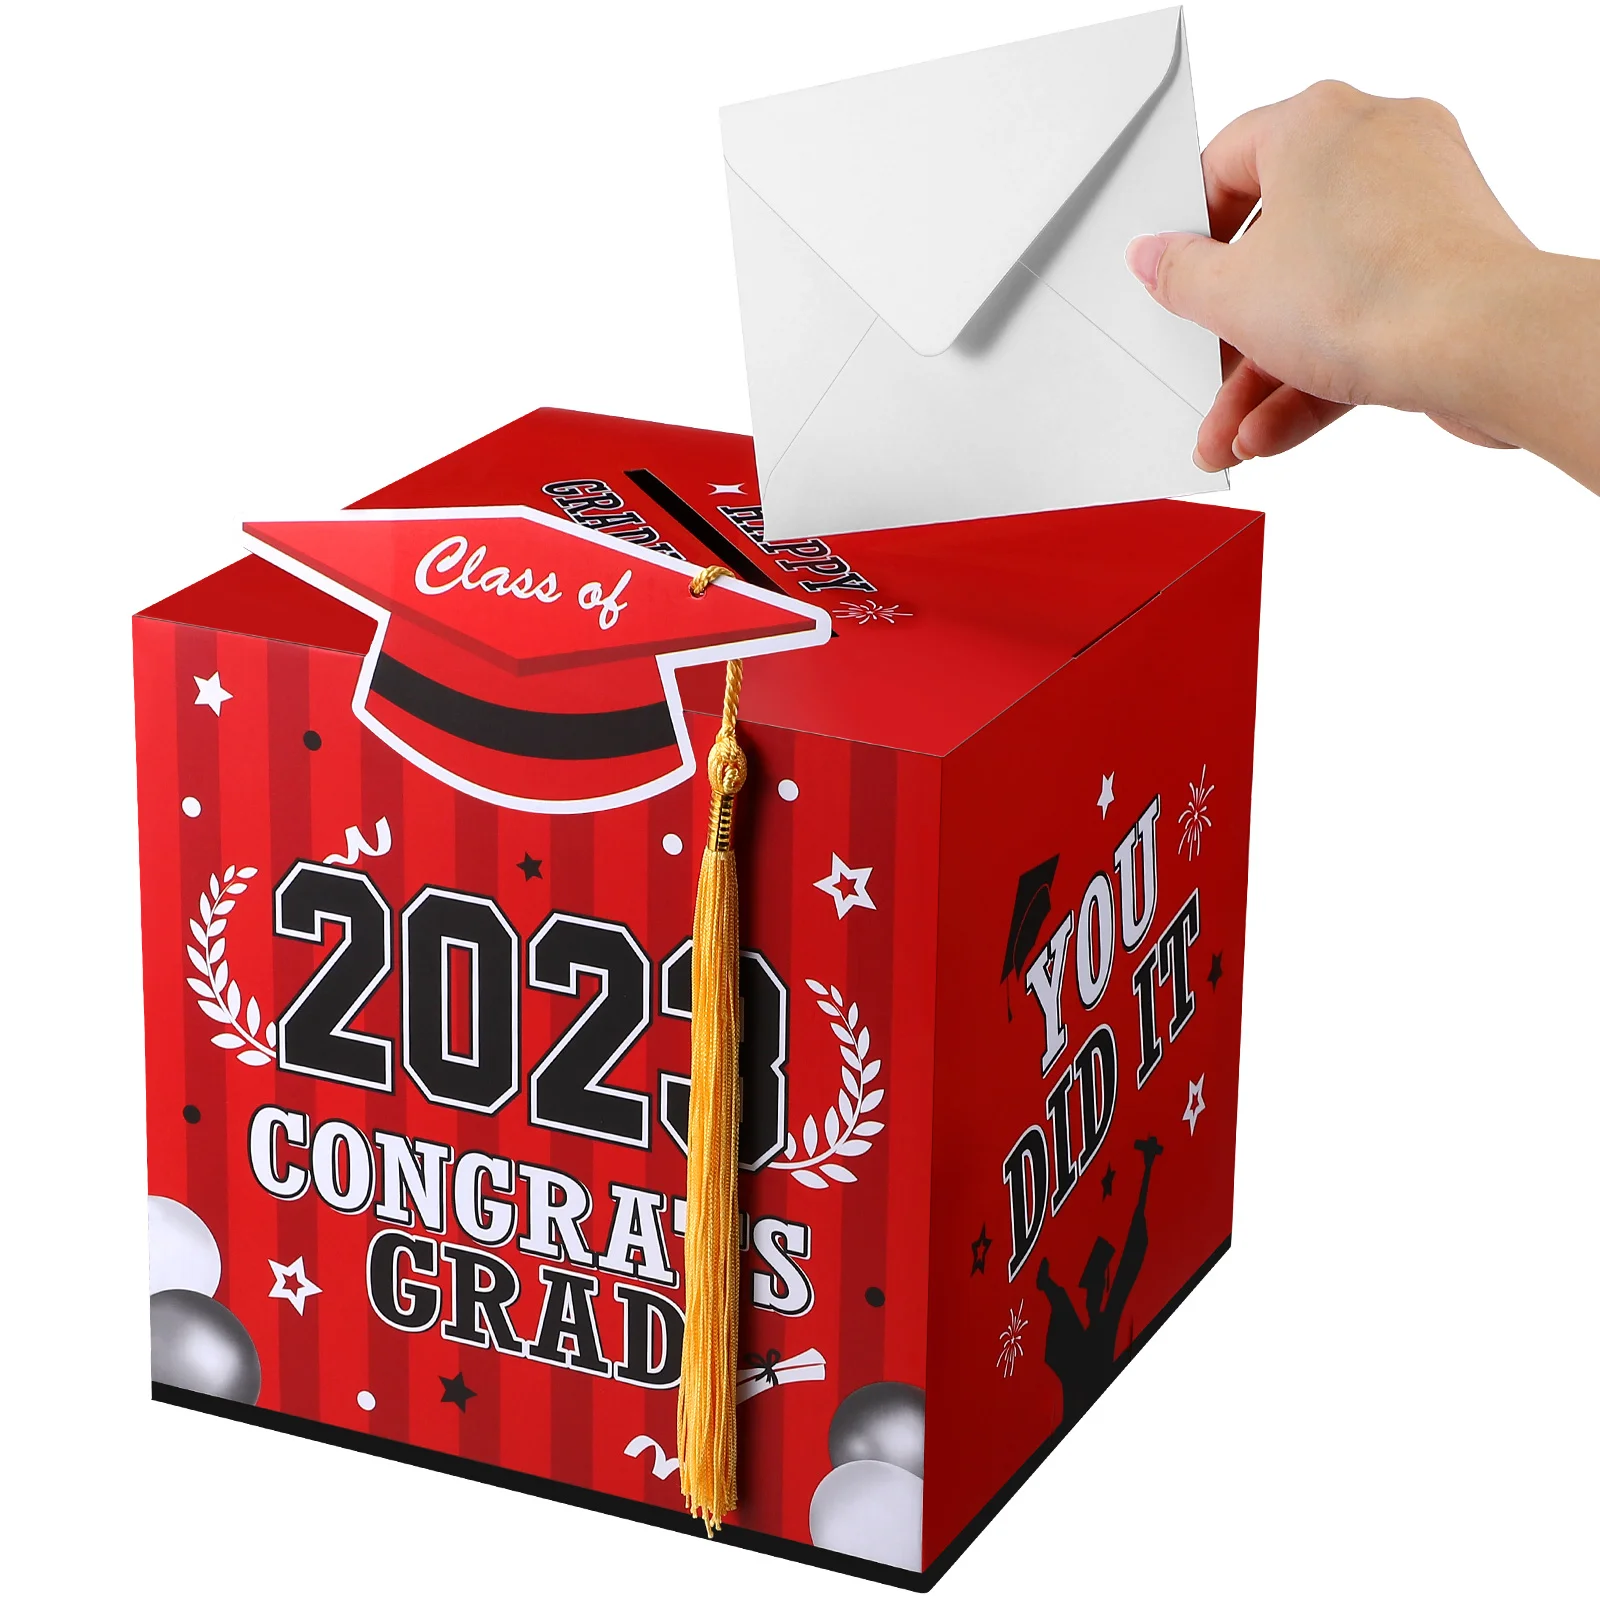 

Box Graduation Grad Party Gift Holder Congrats Graduate Decorations Boxes Supplies Advice Invitation Favors Cap Gradution 2023